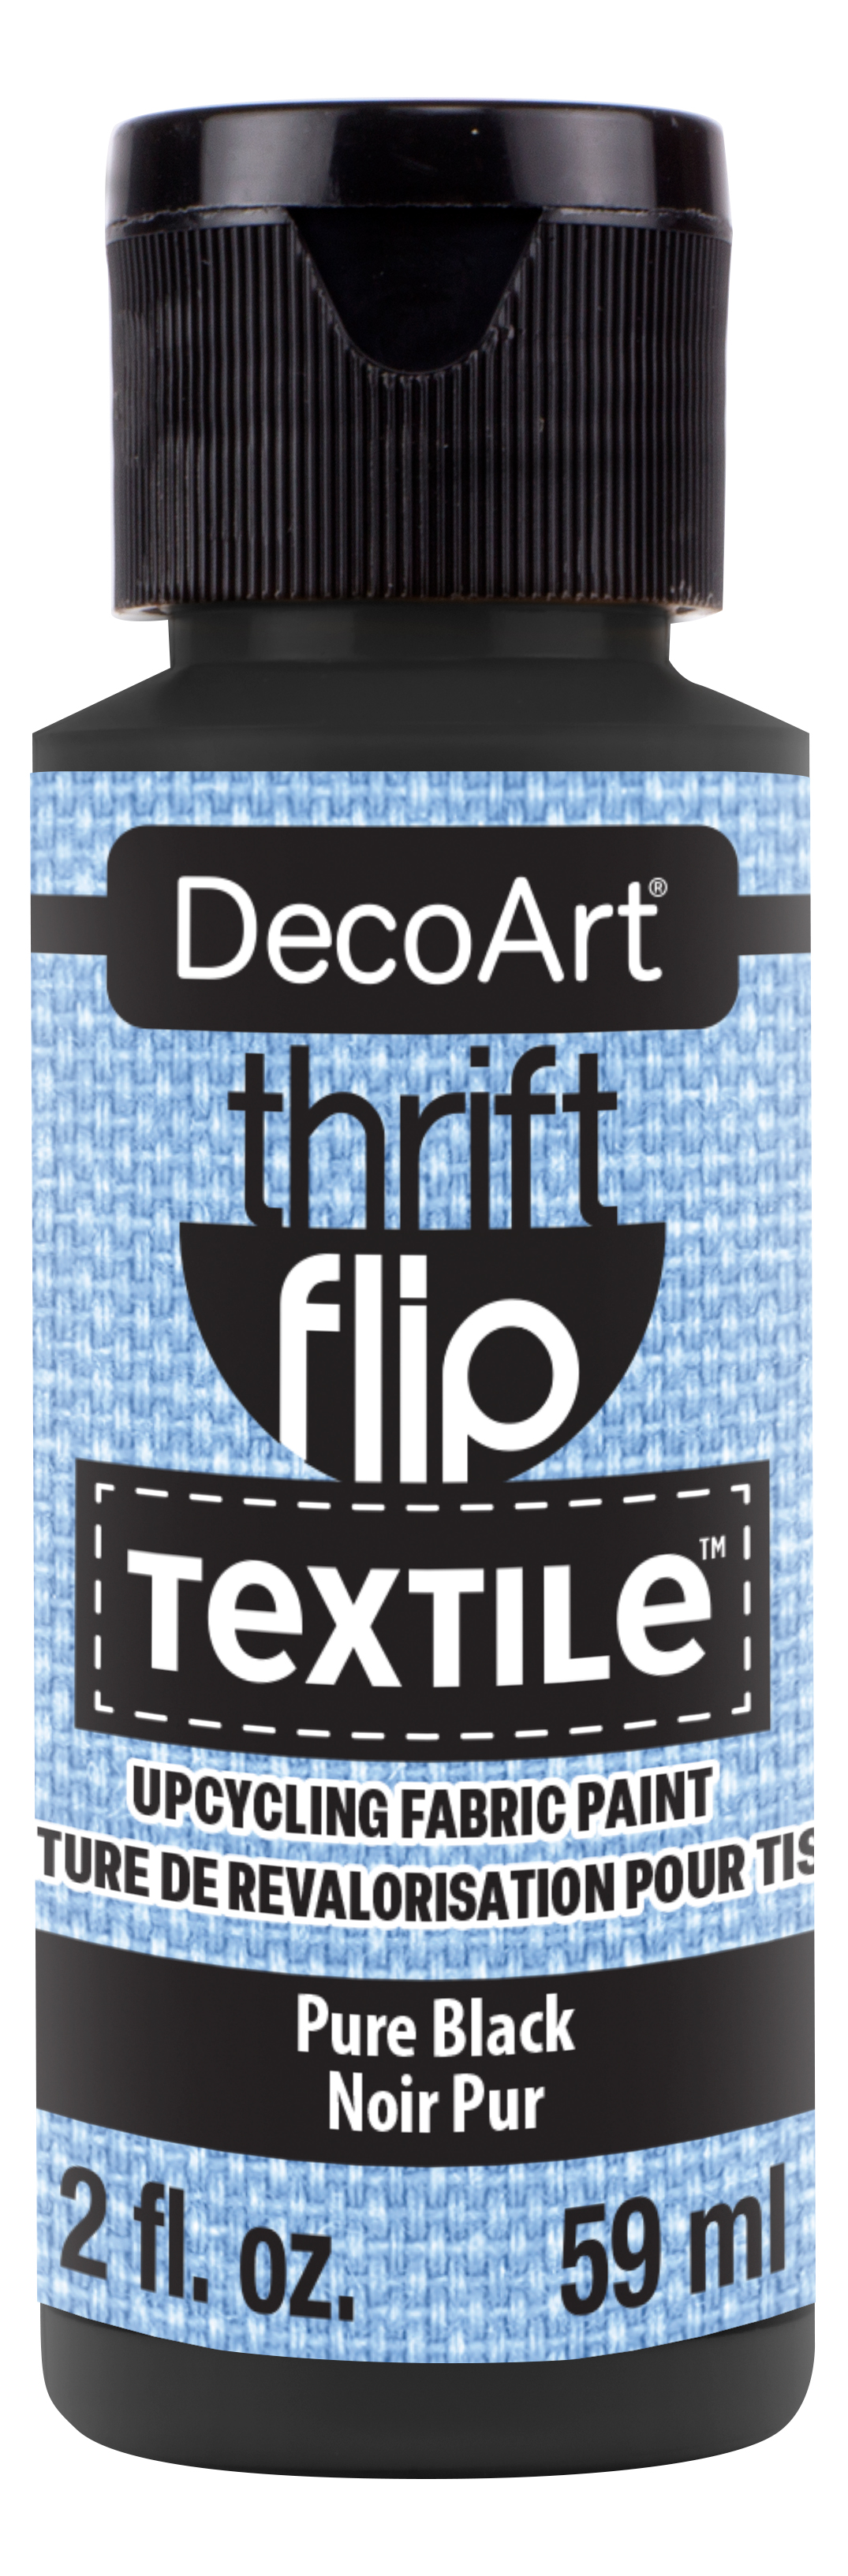 Thrift Flip Textile Paint - DecoArt Acrylic Paint and Art Supplies